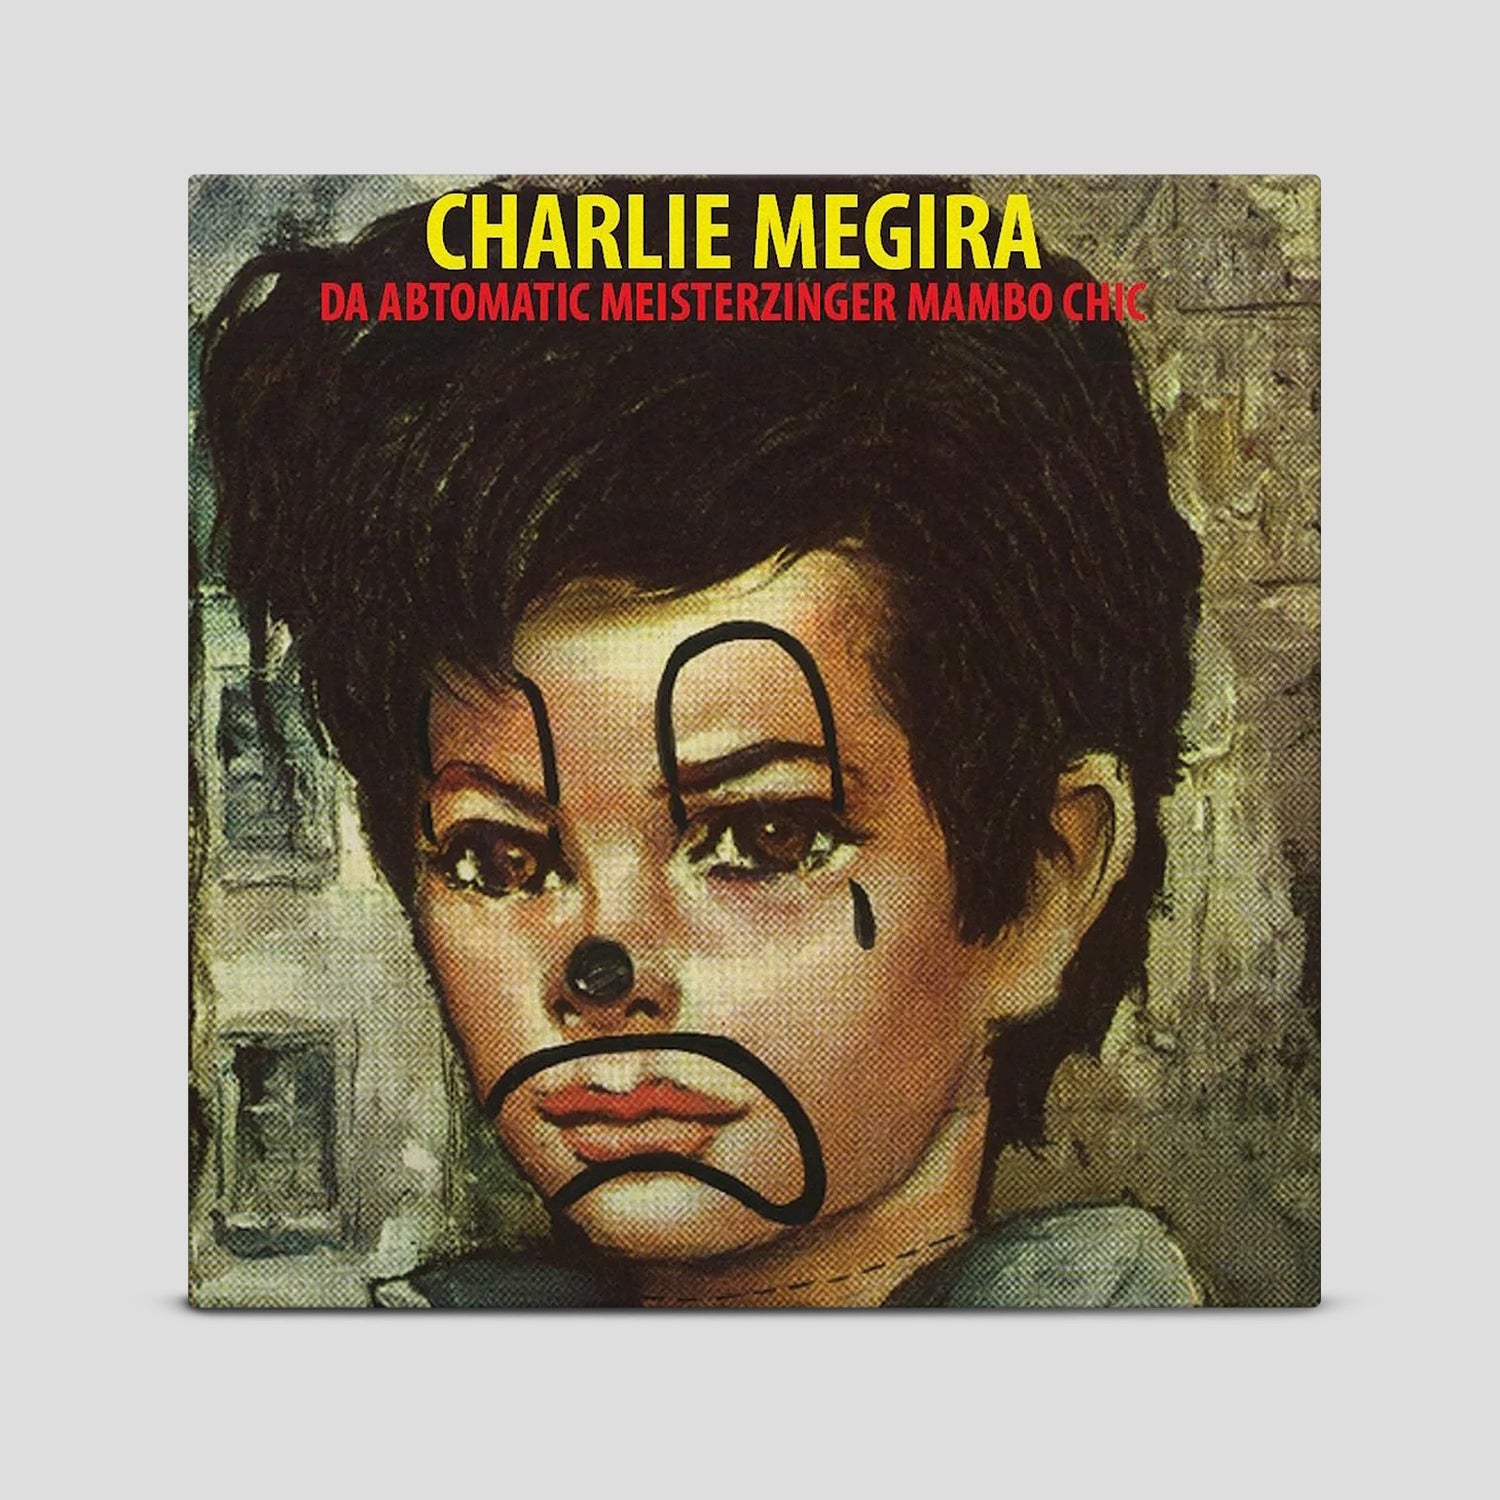 CHARLIE MEGIRA "THE ABTOMATIC MIESTERZINGER MAMBO CHIC" LP